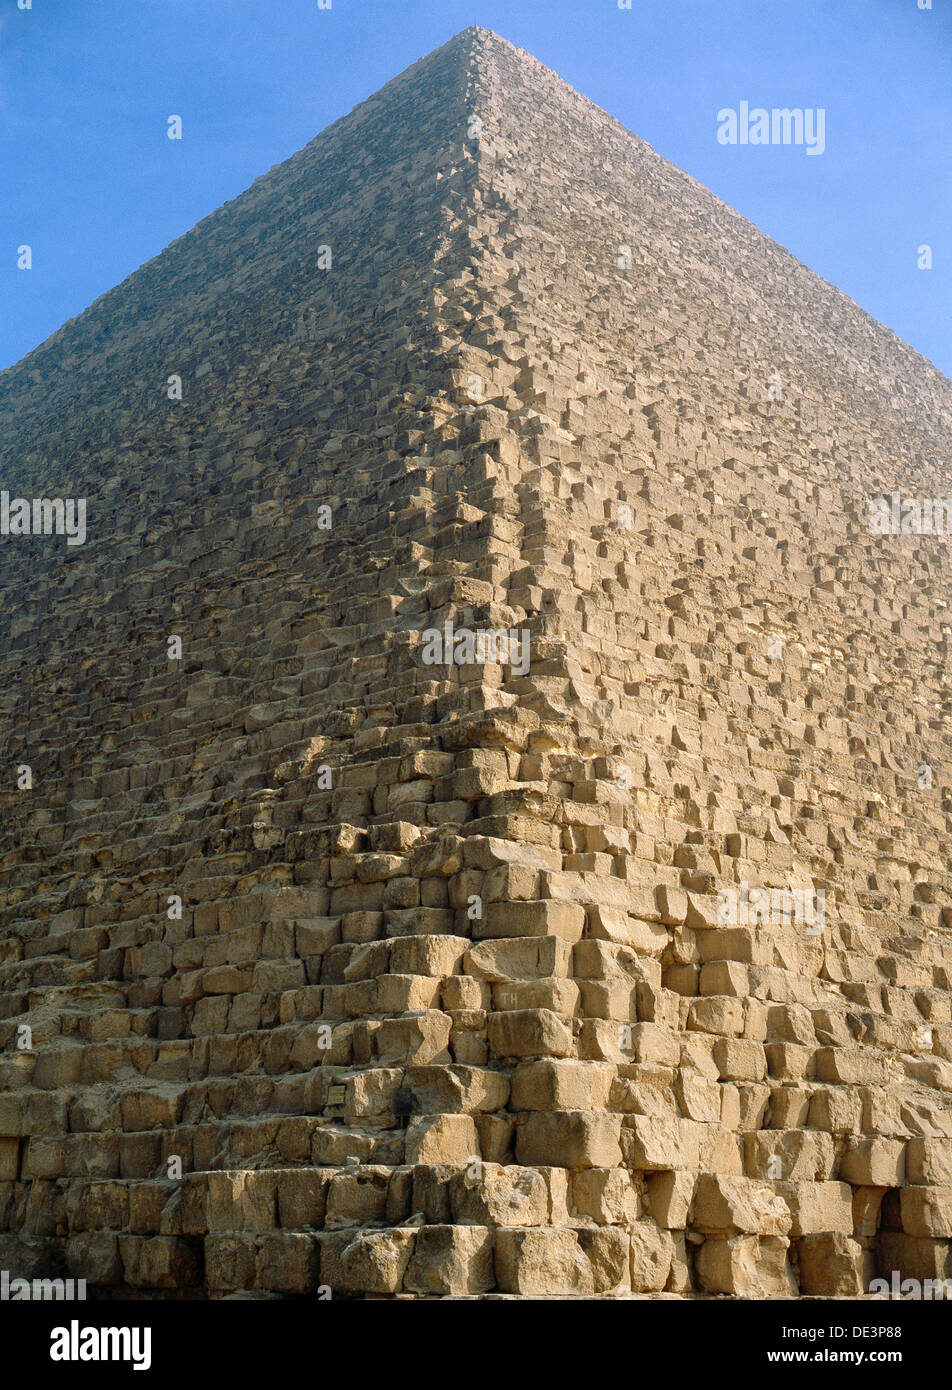 La Gran Pirámide de Keops. Foto de stock